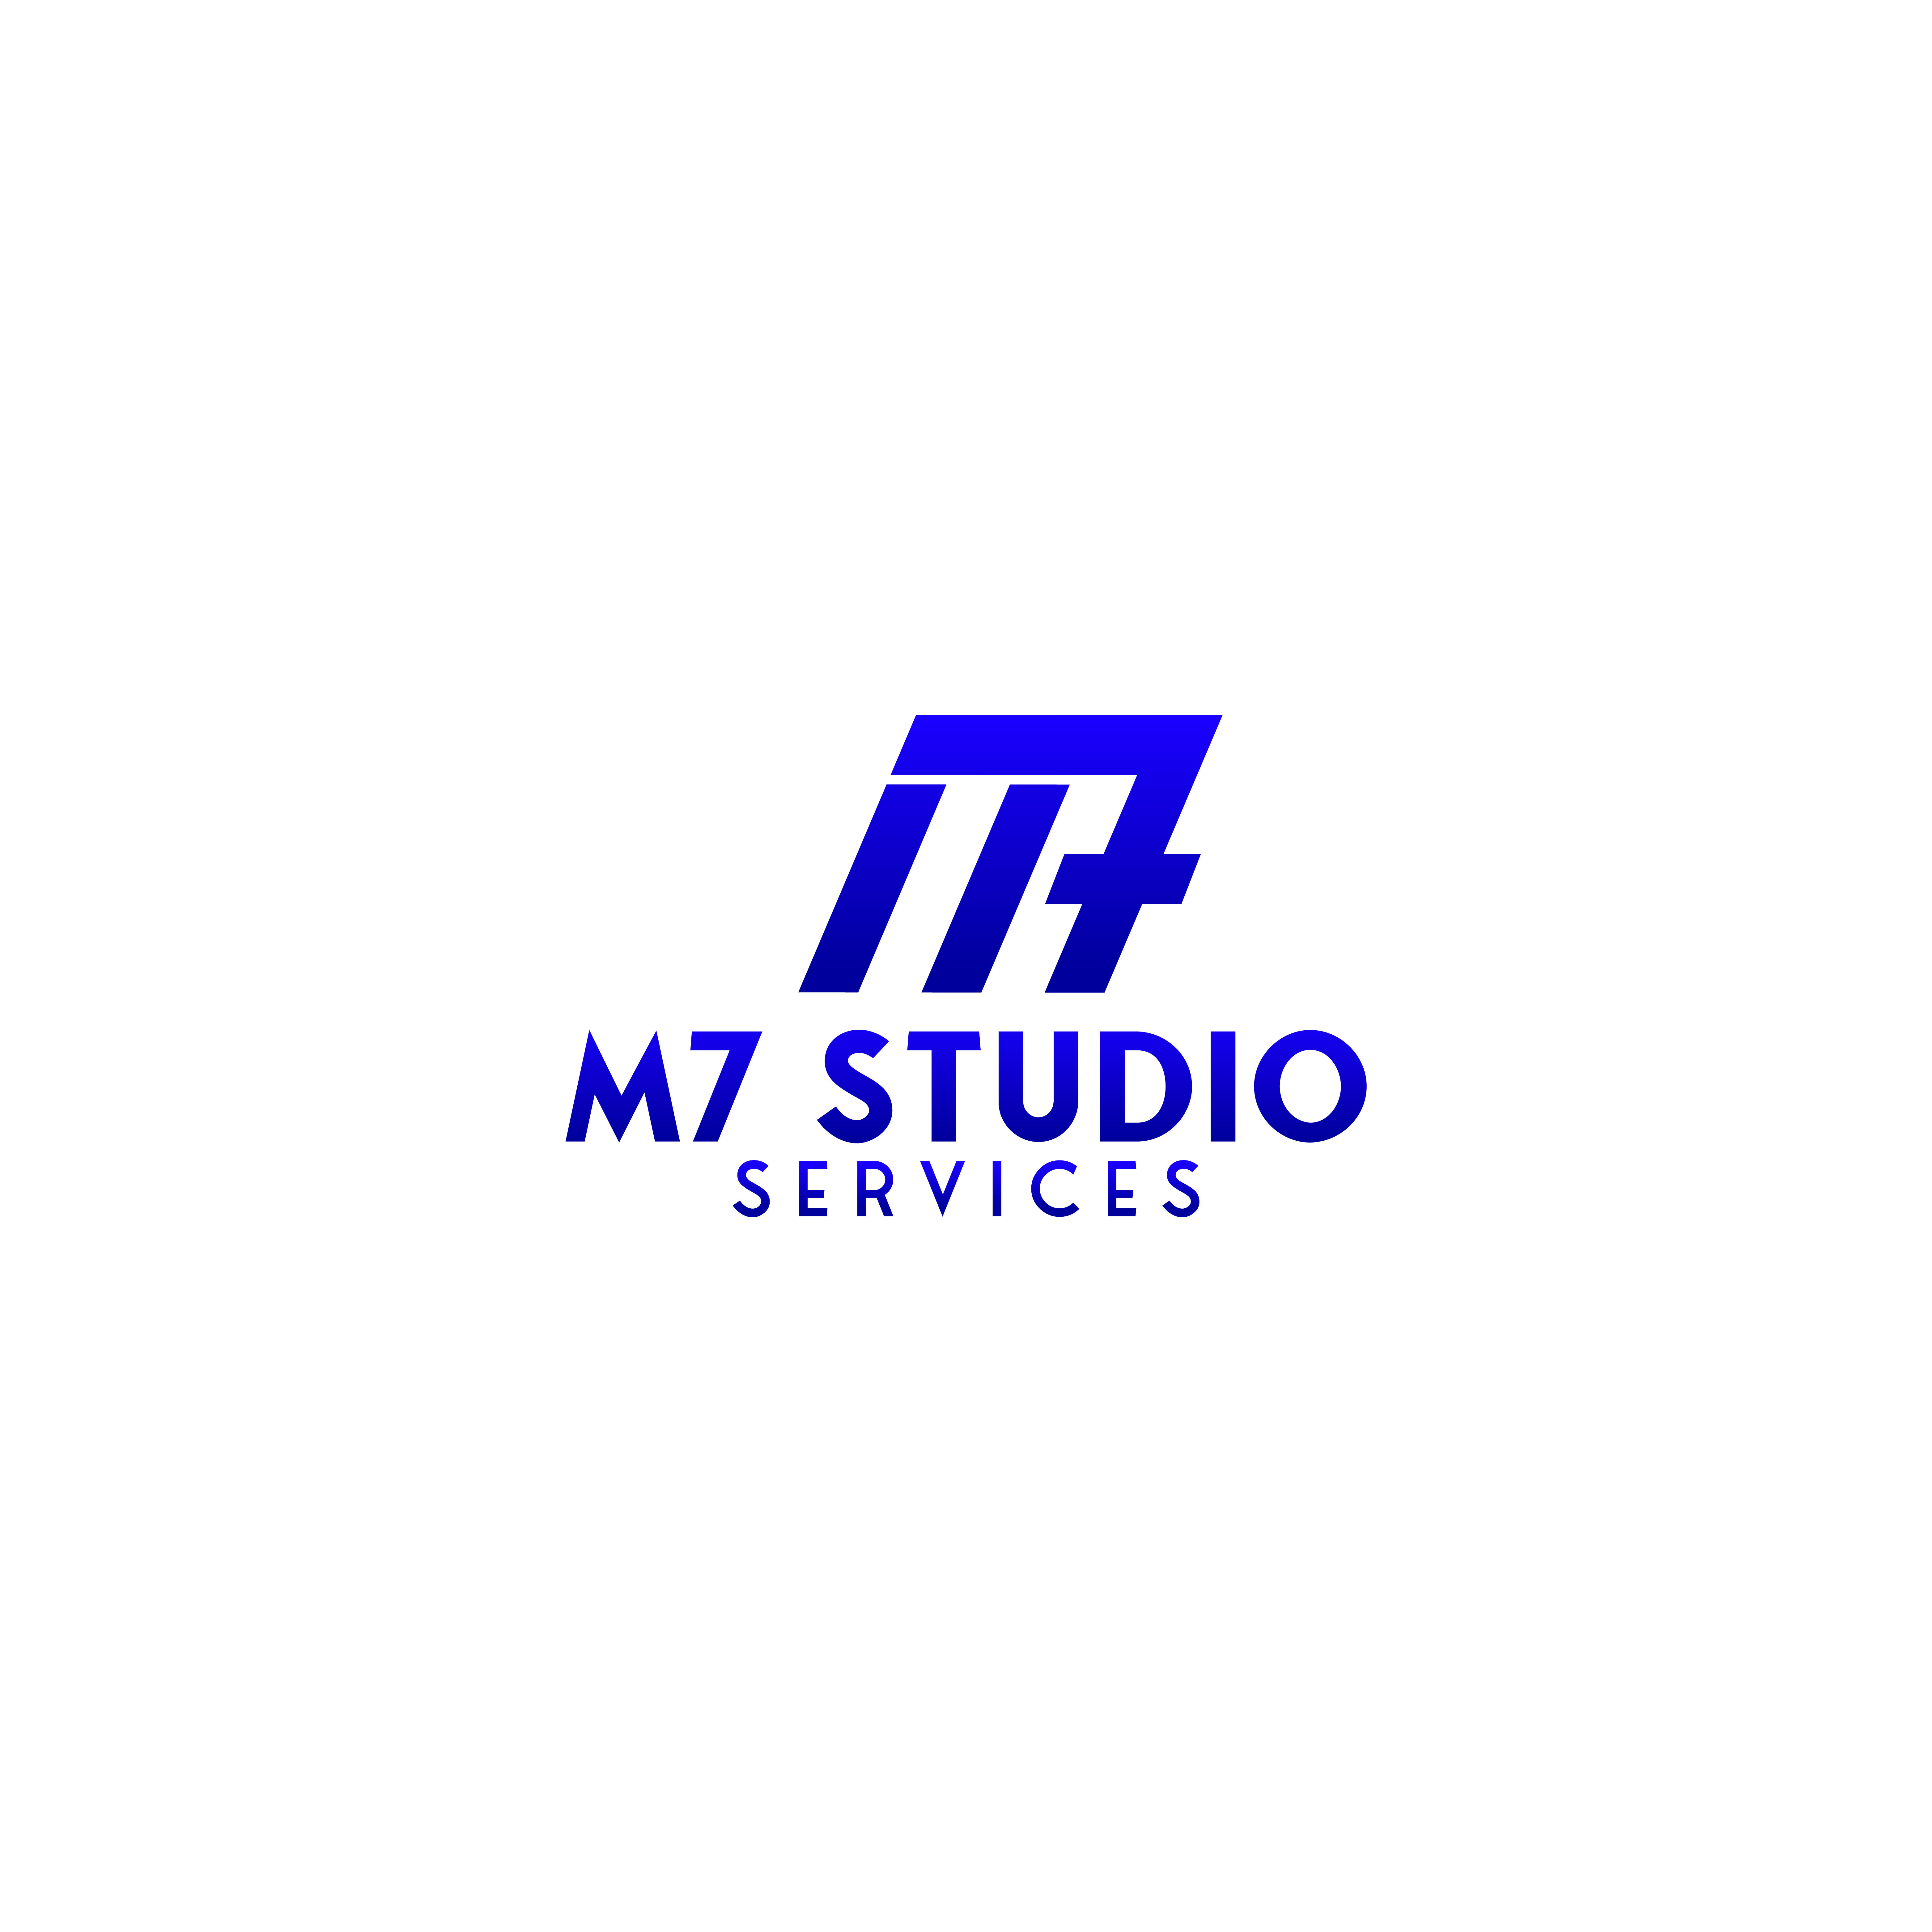 M7 STUDIO SERVICES LLC Logo